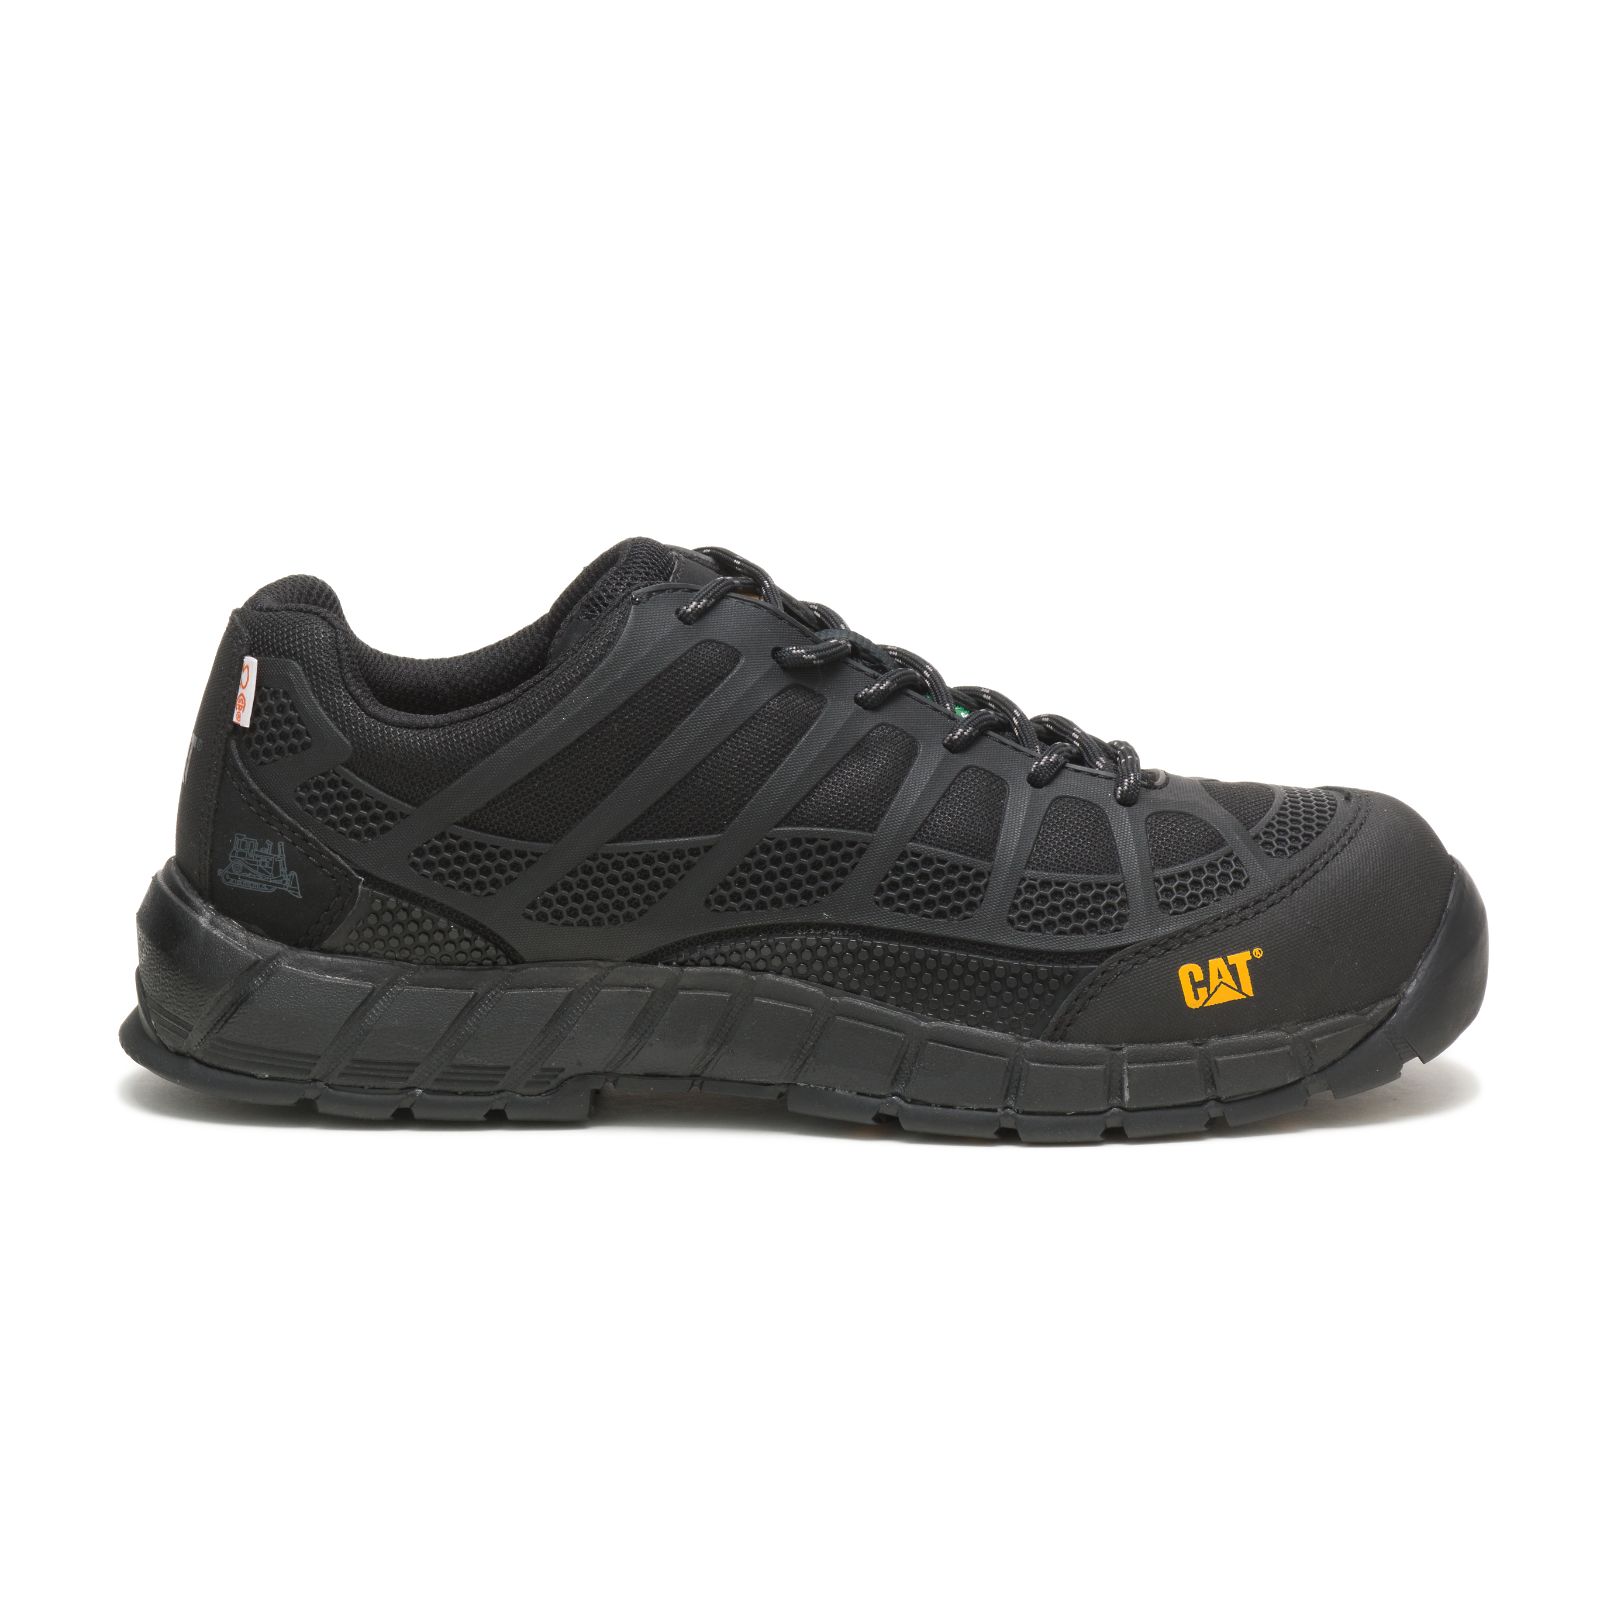 Caterpillar Shoes Online Pakistan - Caterpillar Streamline Csa Shoe (Composite Toe, Non Metallic) Mens Sneakers Black (708562-NZT)